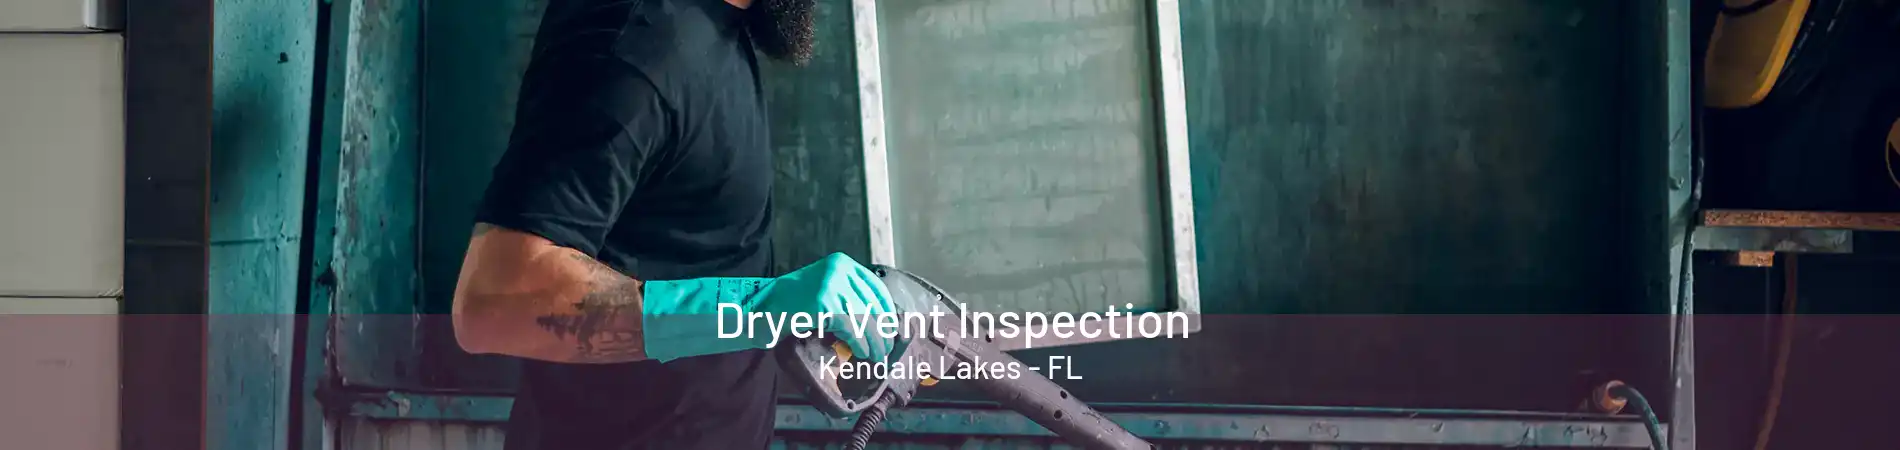 Dryer Vent Inspection Kendale Lakes - FL